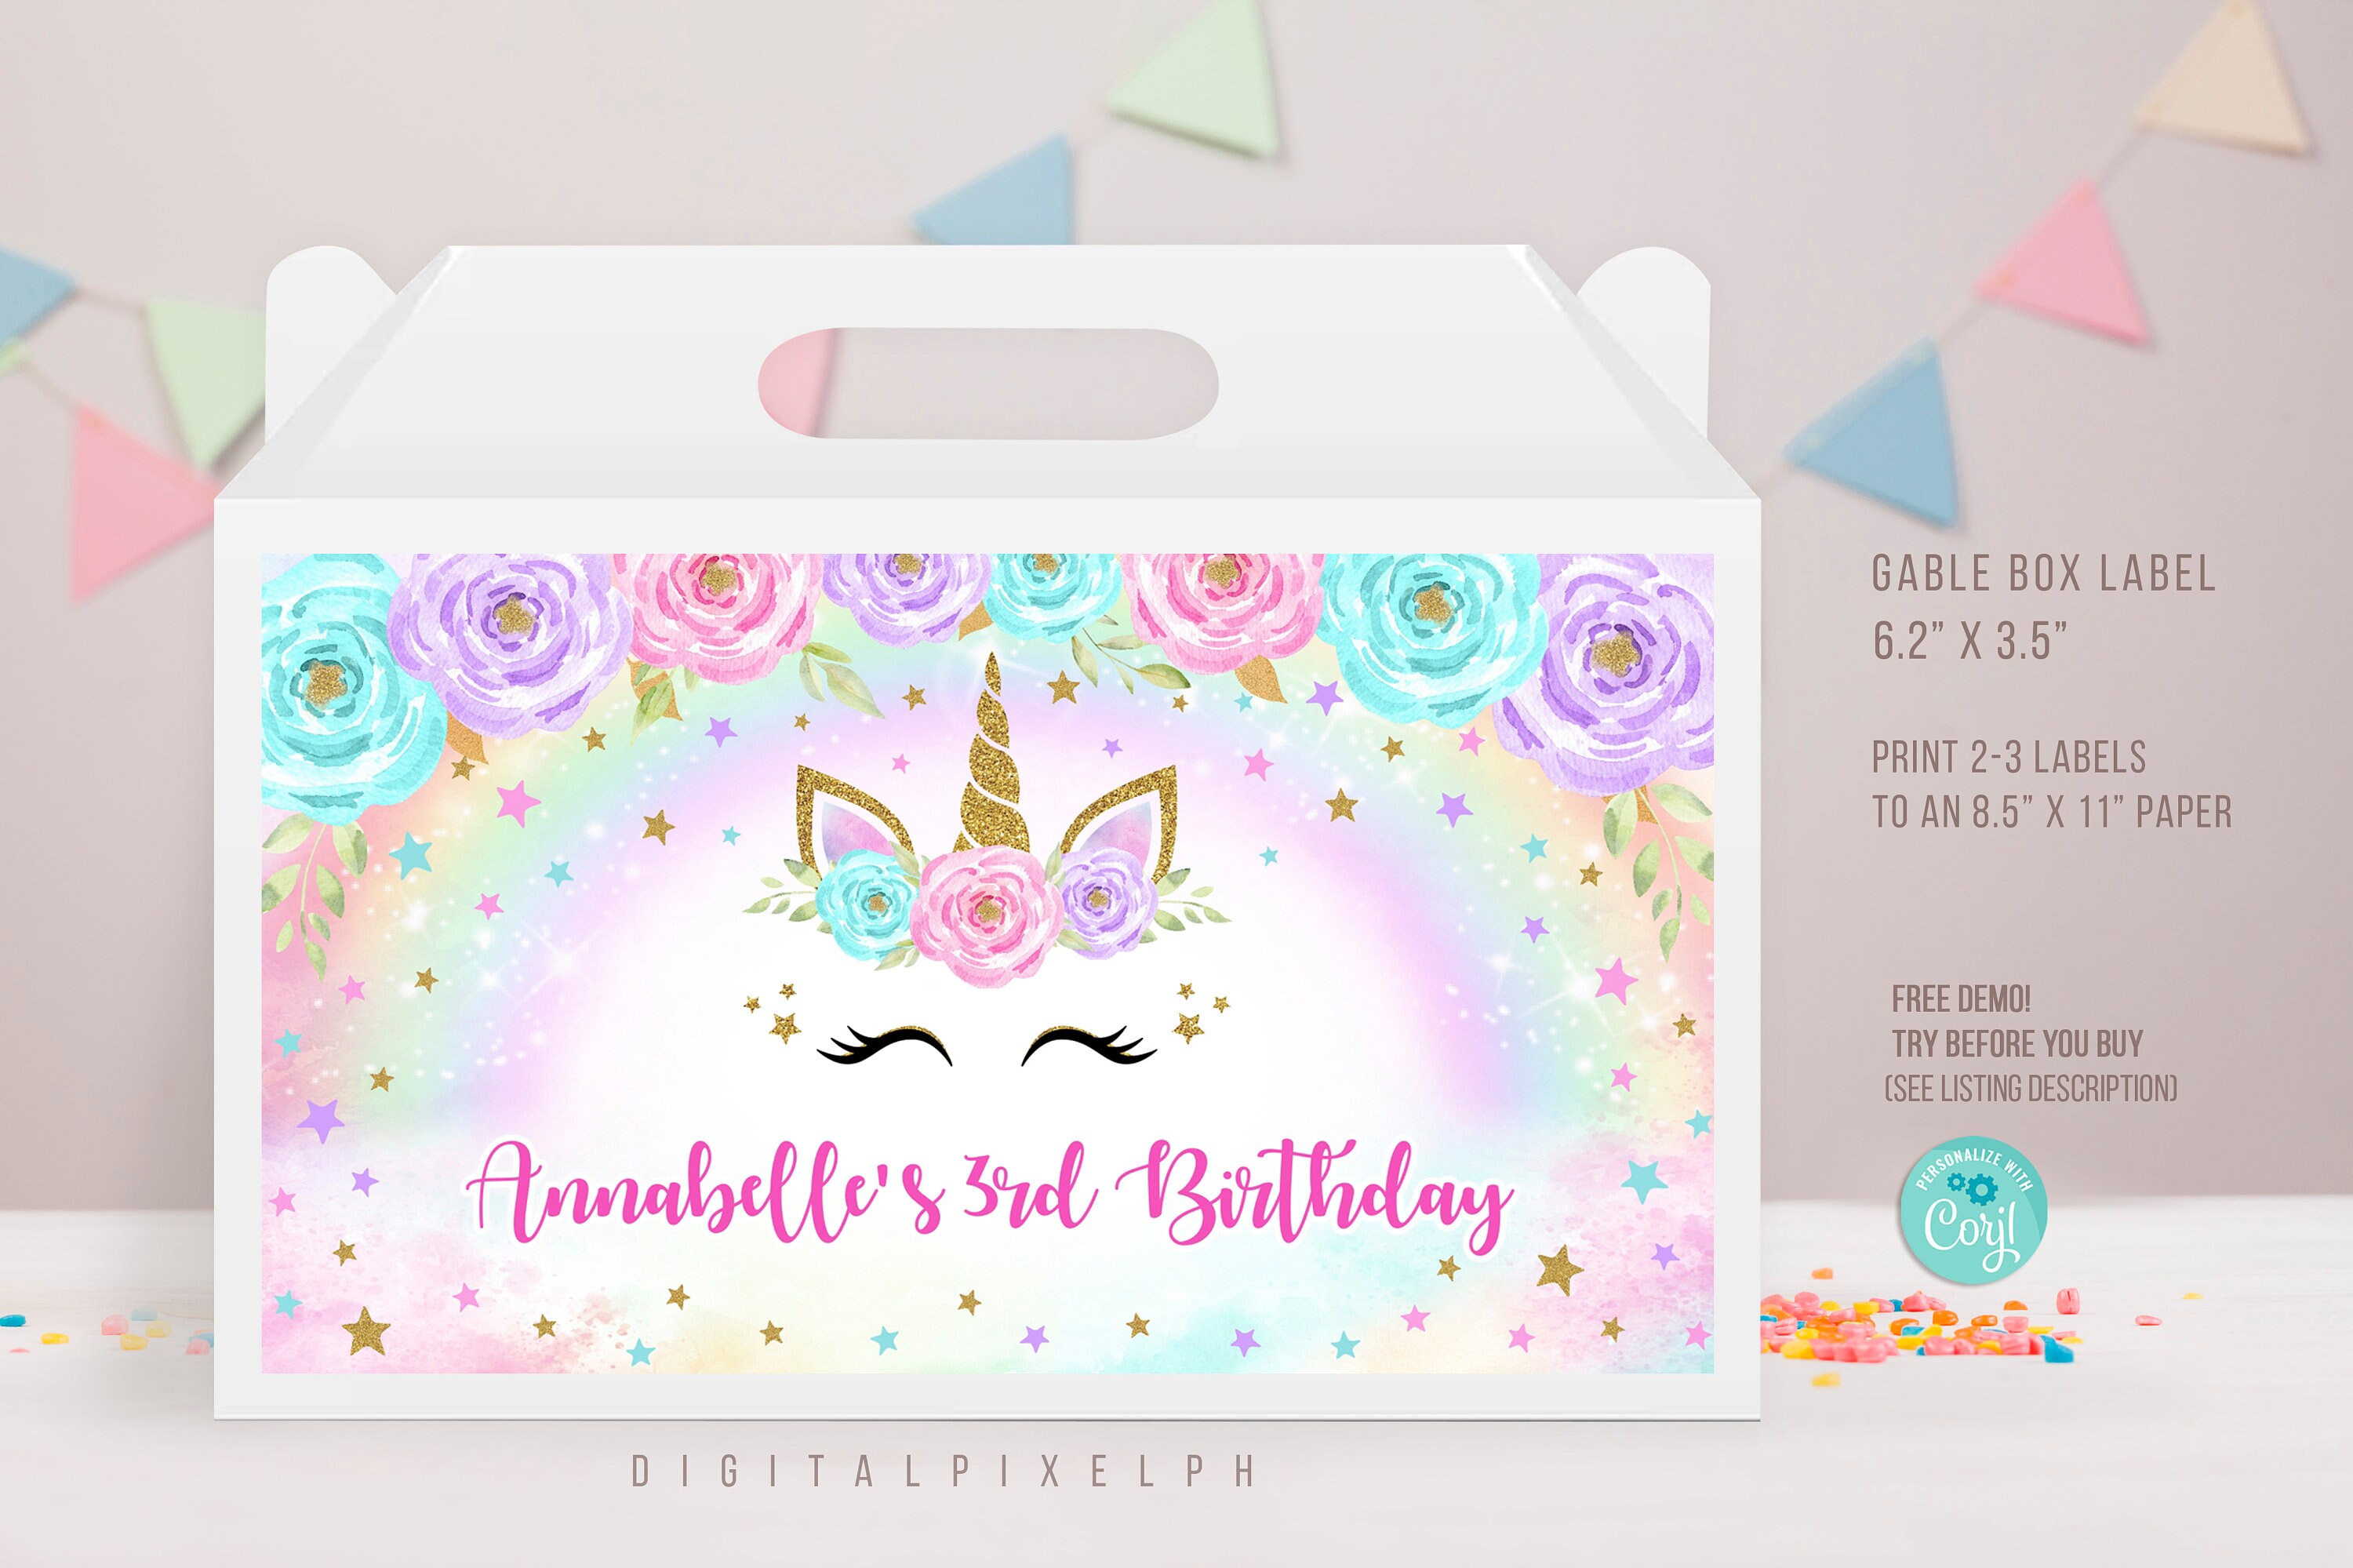 Unicorn Capri Sun Labels-Unicorn Birthday Party-Unicorn Birthday-Capri –  Favorably Wrapped